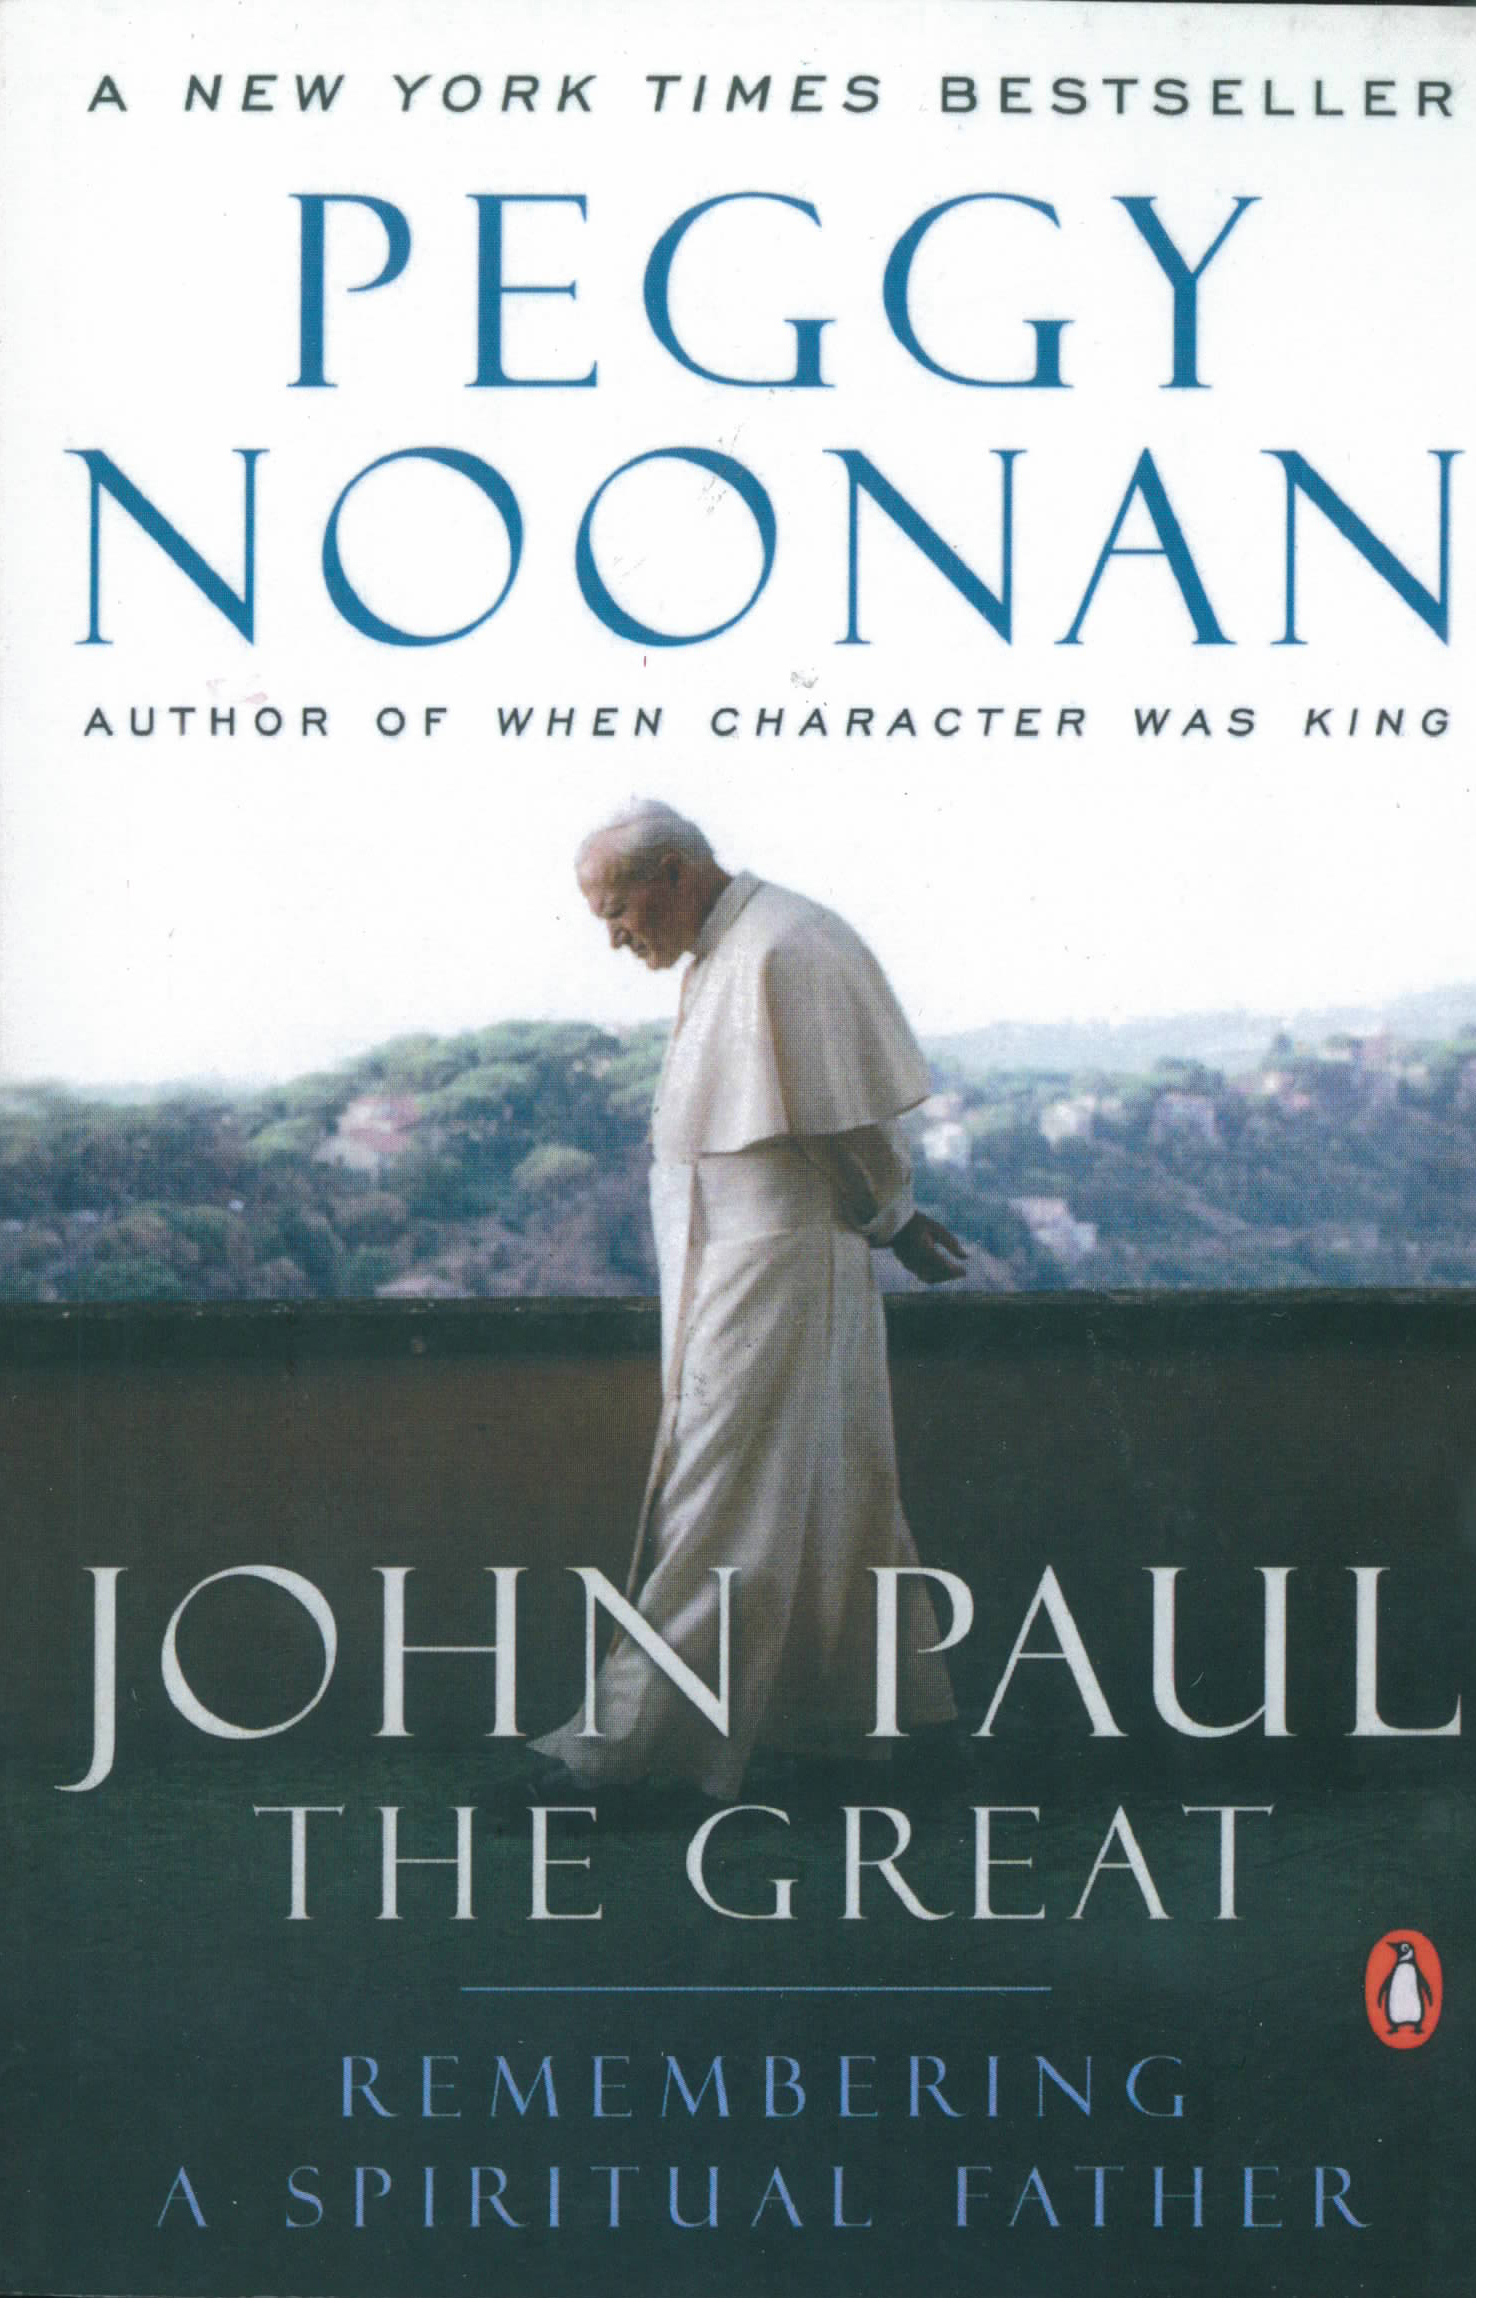 Pope John Paul II book John Paul the Great: Remembering a Spiritual Father by Peggy Noonan is a Book on Pope Saint John Paul II